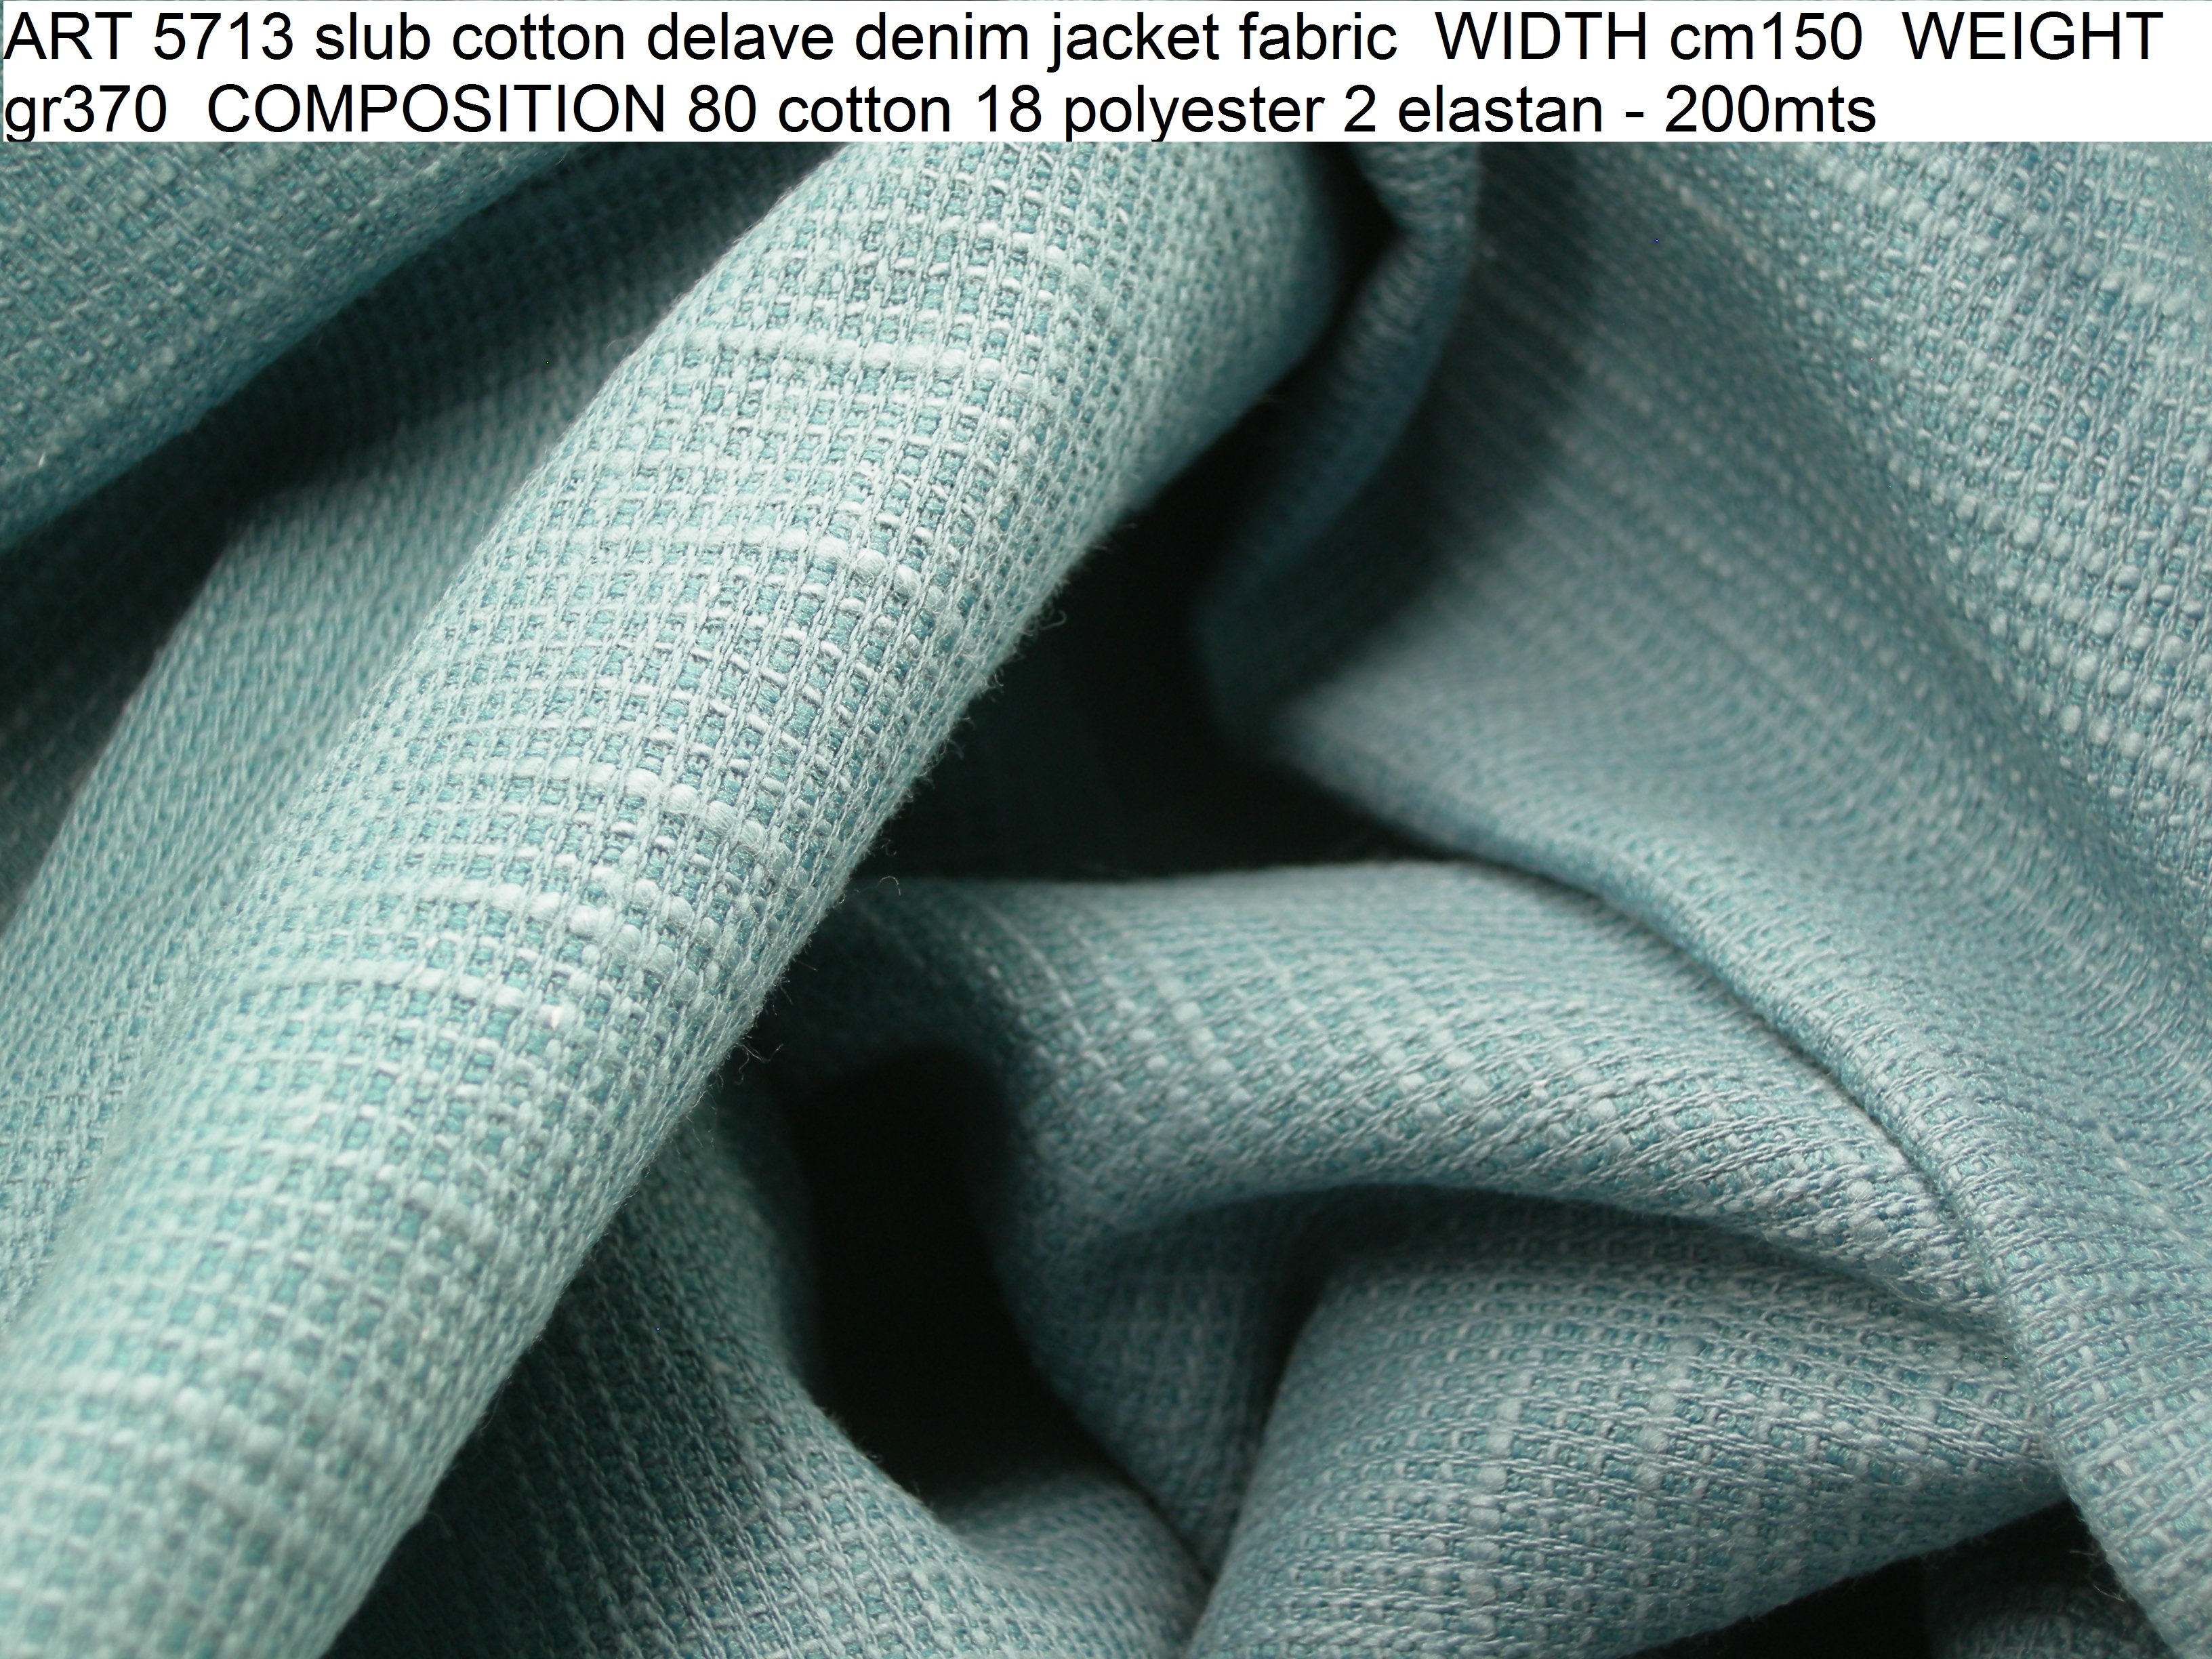 ART 5713 slub cotton delave denim jacket fabric WIDTH cm150 WEIGHT gr370 COMPOSITION 80 cotton 18 polyester 2 elastan - 200mts